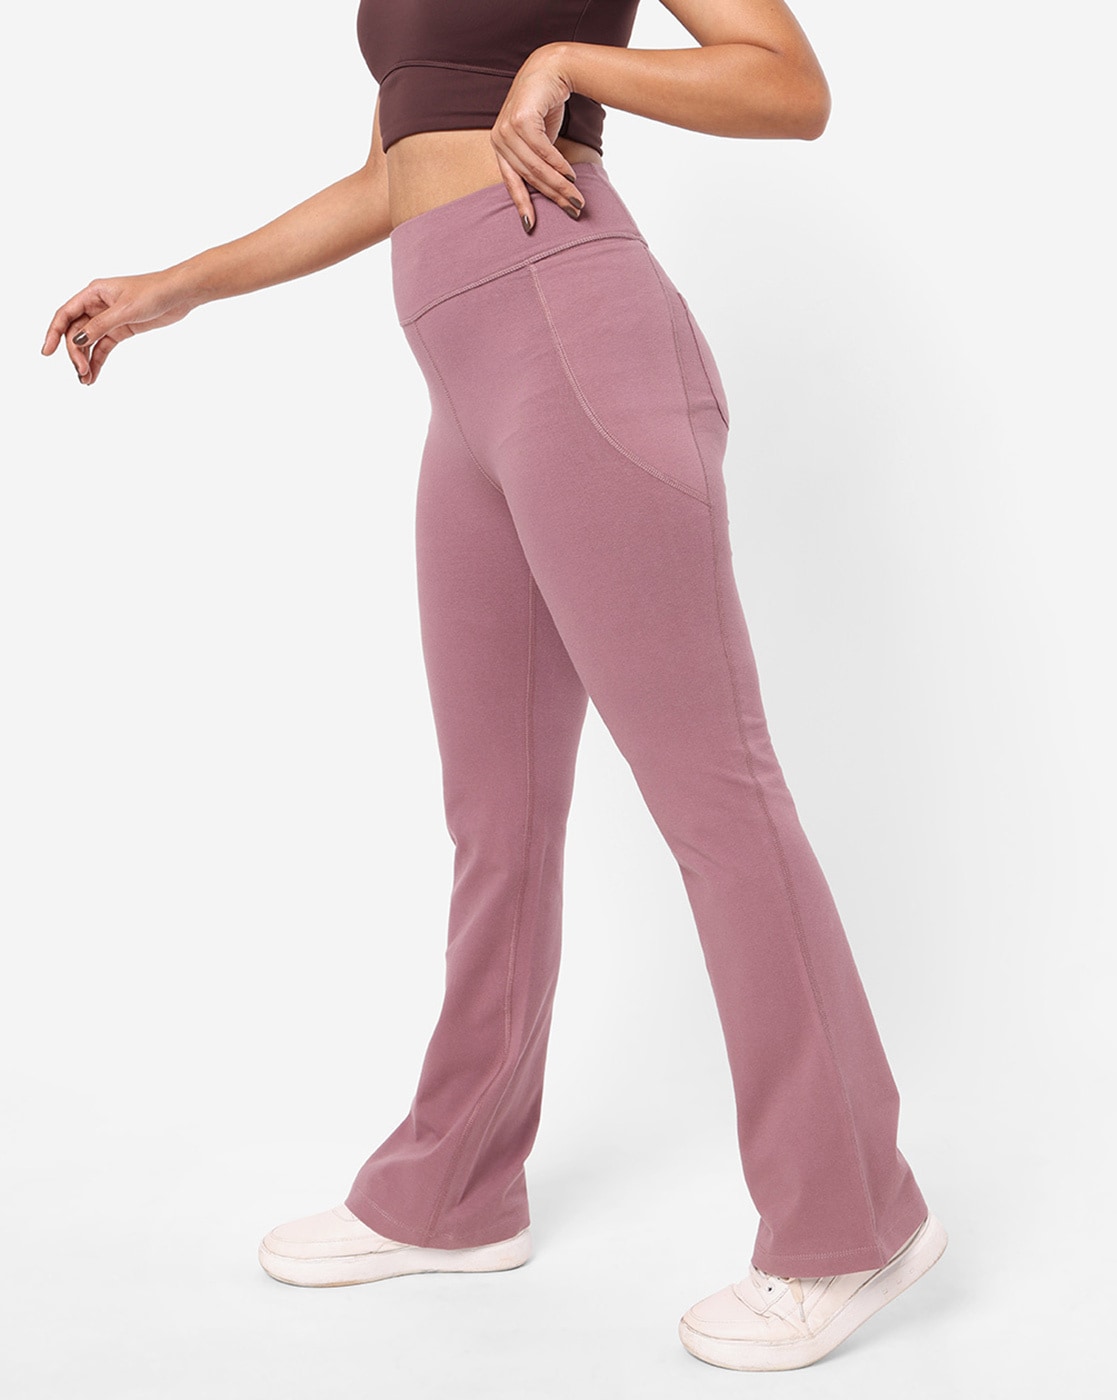 Buy Lavender Track Pants for Women by BLISSCLUB Online  Ajiocom